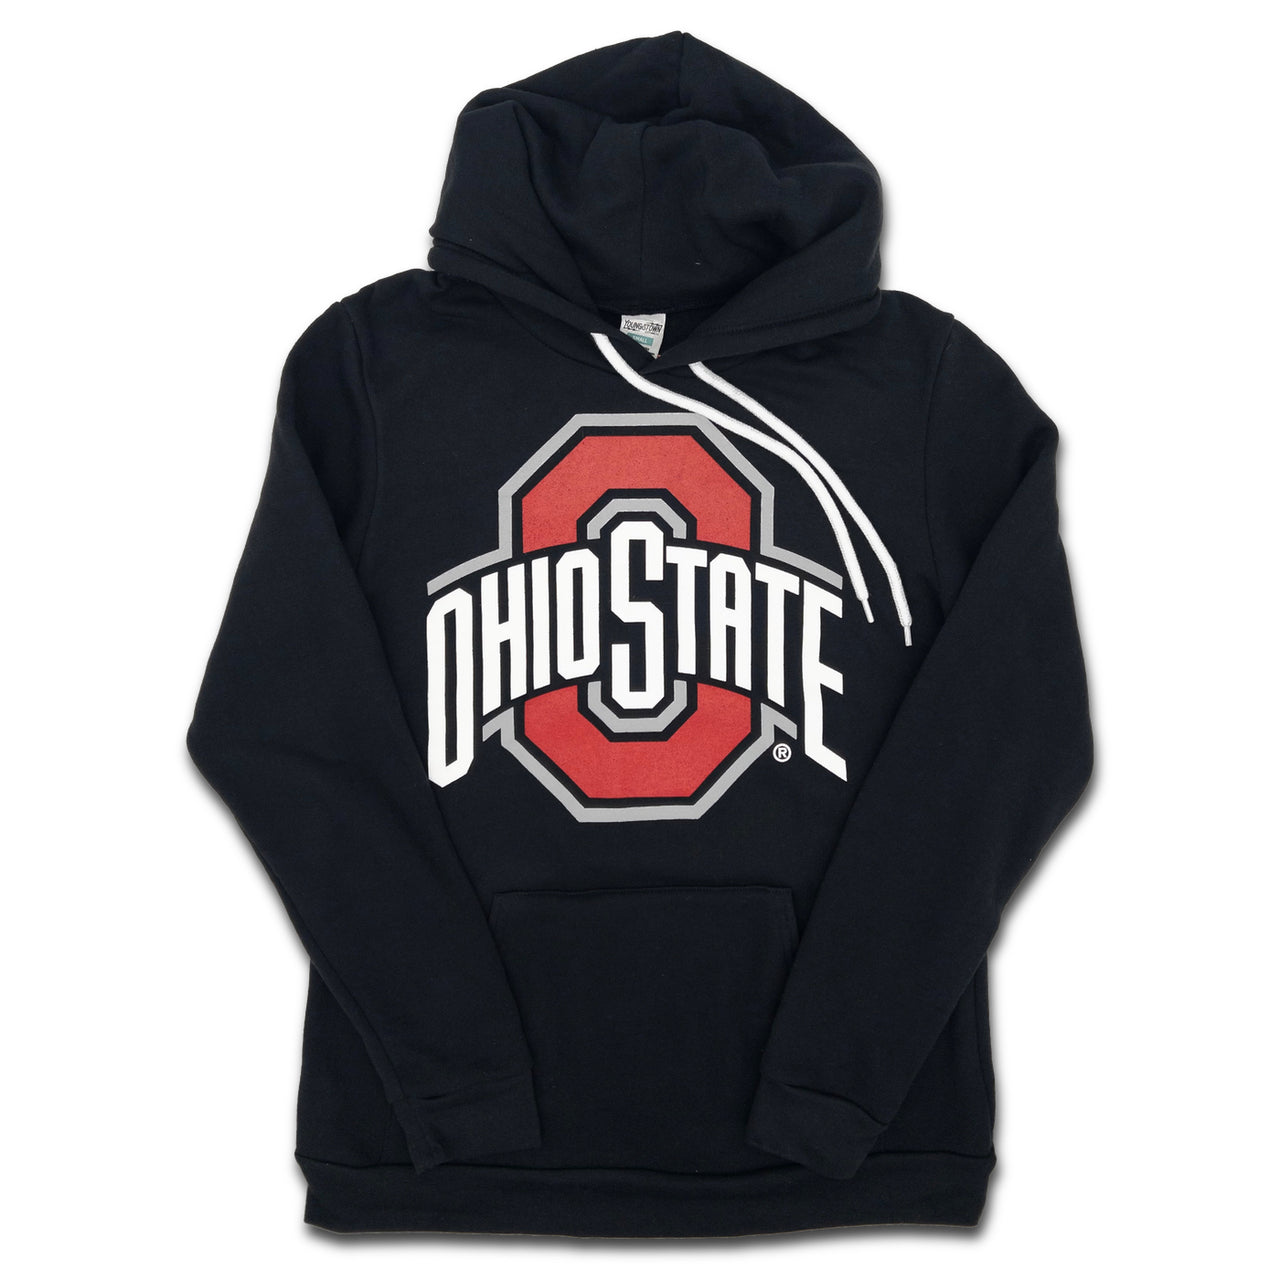 Ohio State Athletic Logo Hoodie (Black)